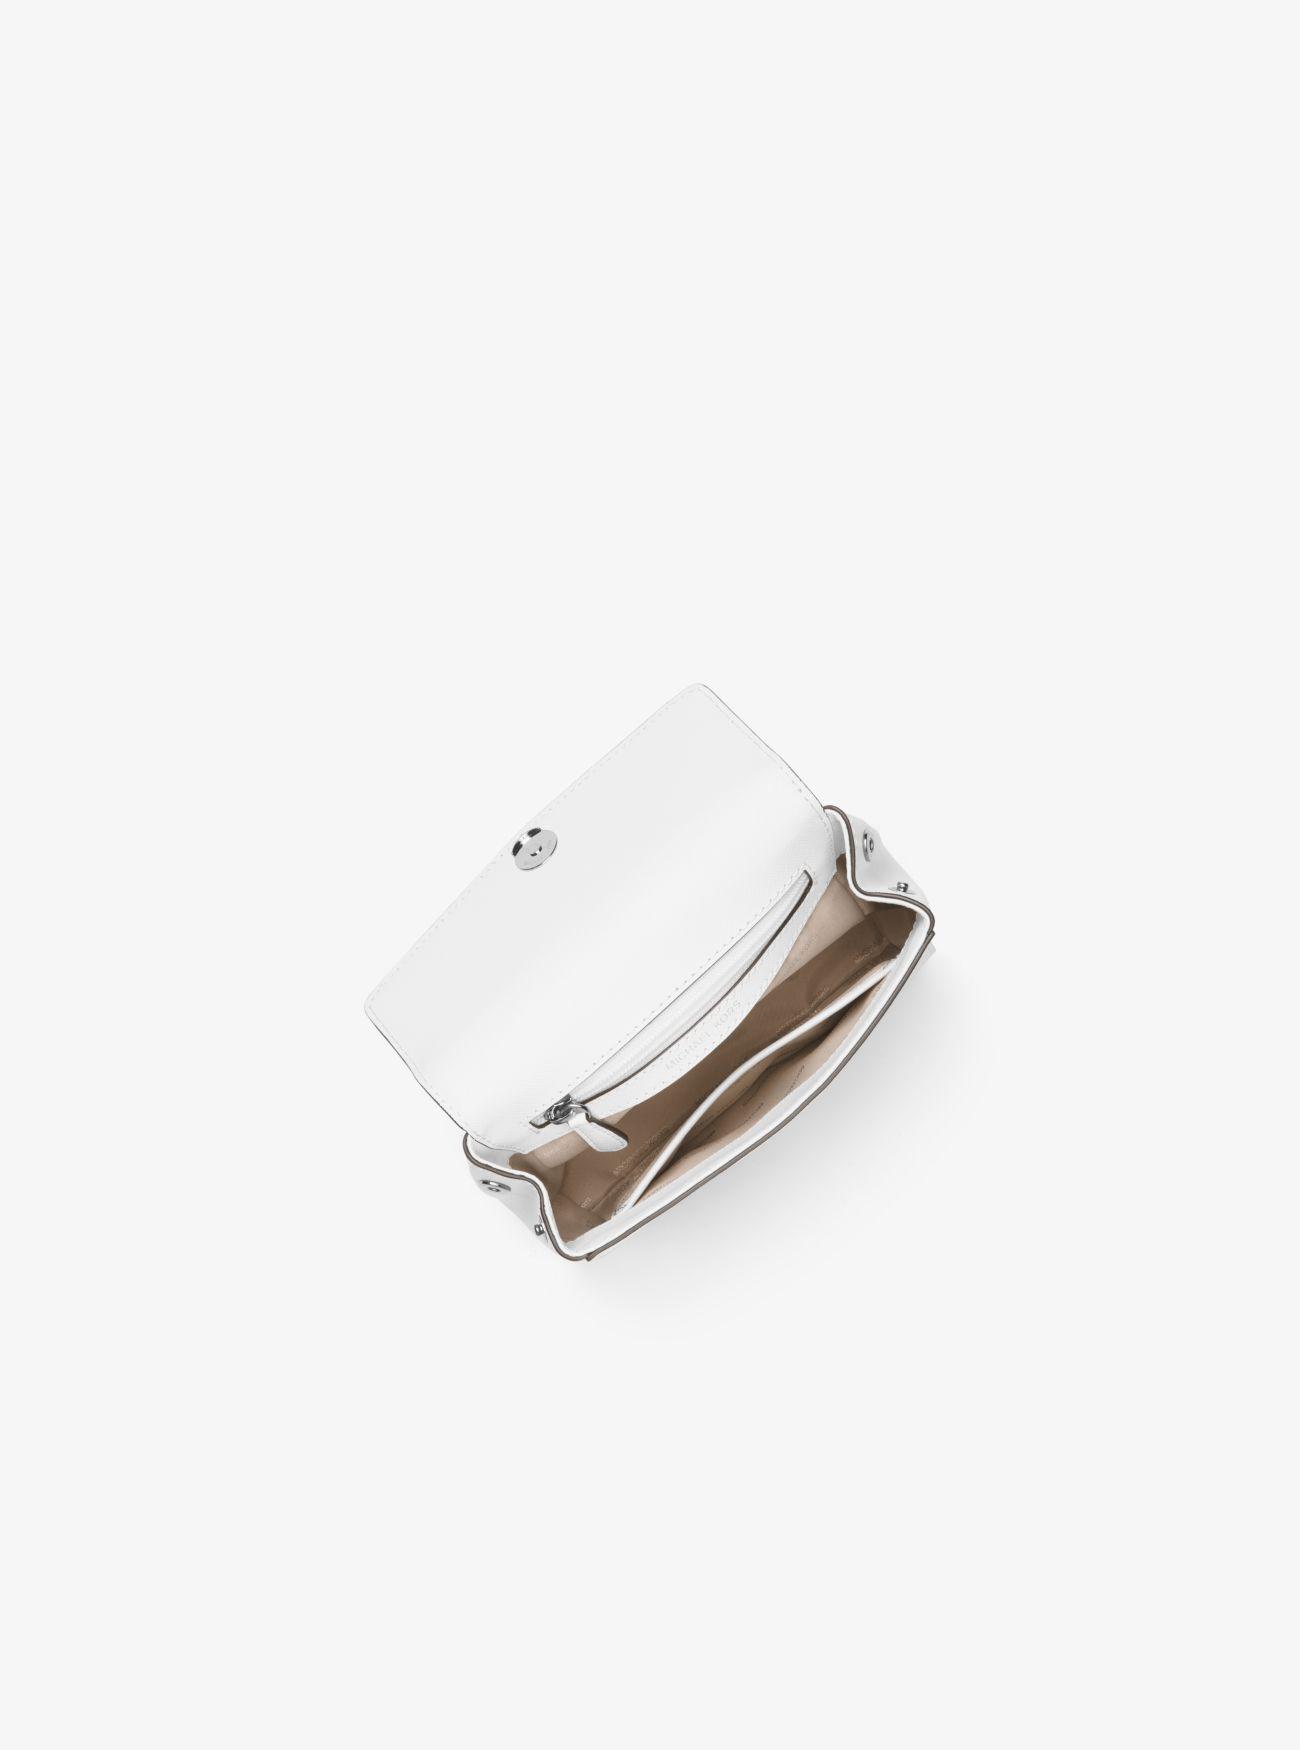 Michael Kors Ava Extra-small Saffiano Leather Crossbody Bag in